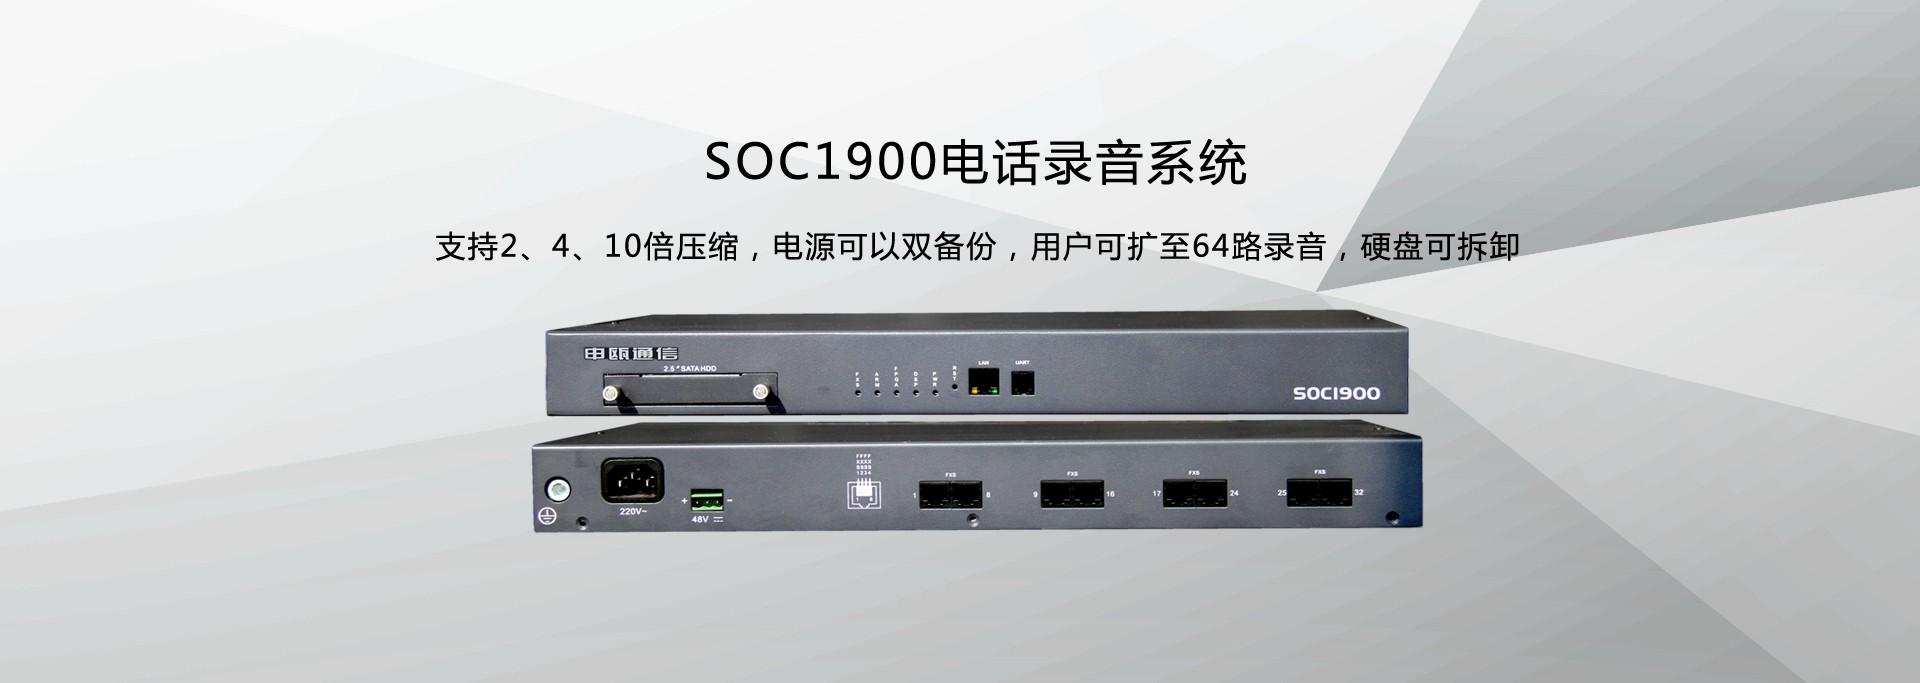 SOC1900电话录音系统